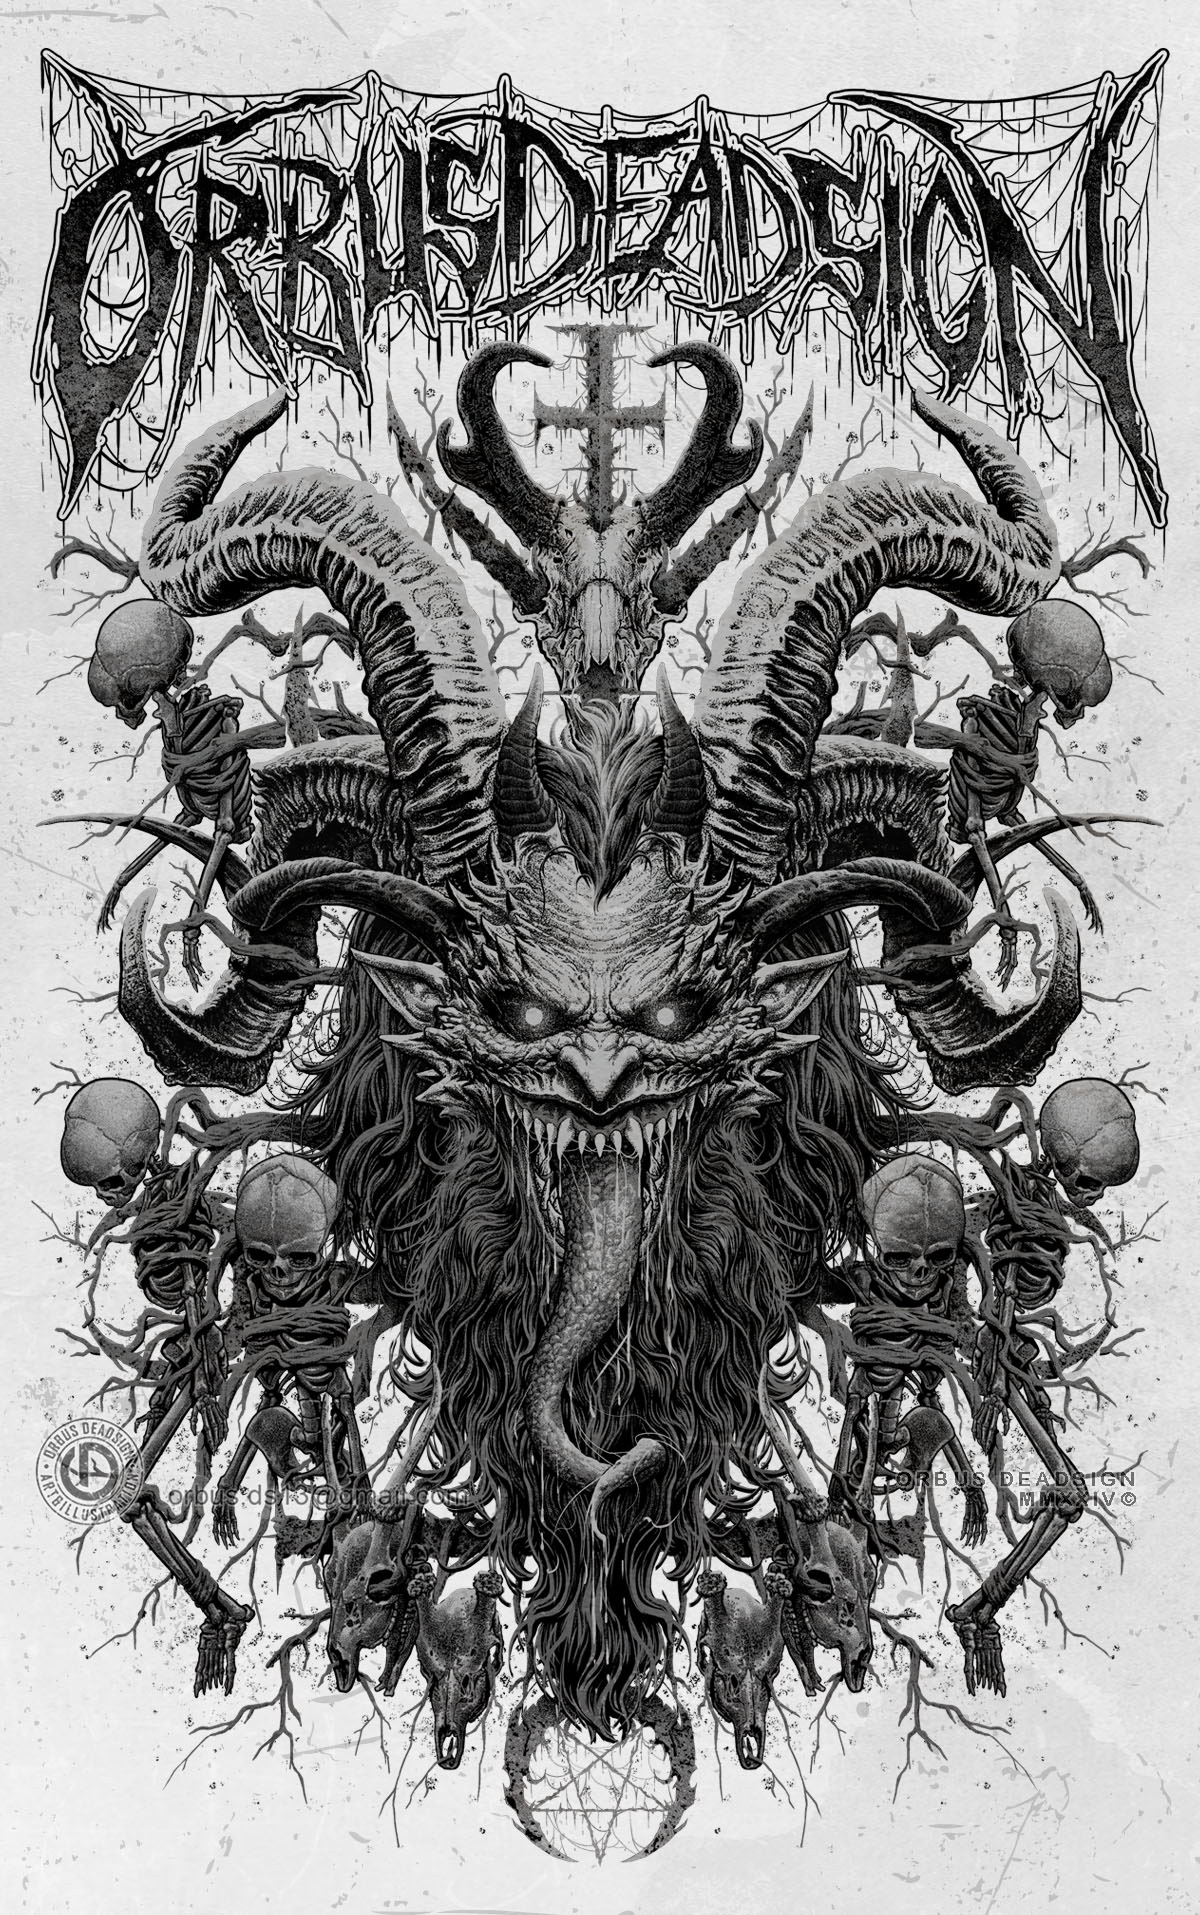 Krampus goat zombie death metal heavy metal black metal T-Shirt Design cthulhu metal artwork death core 